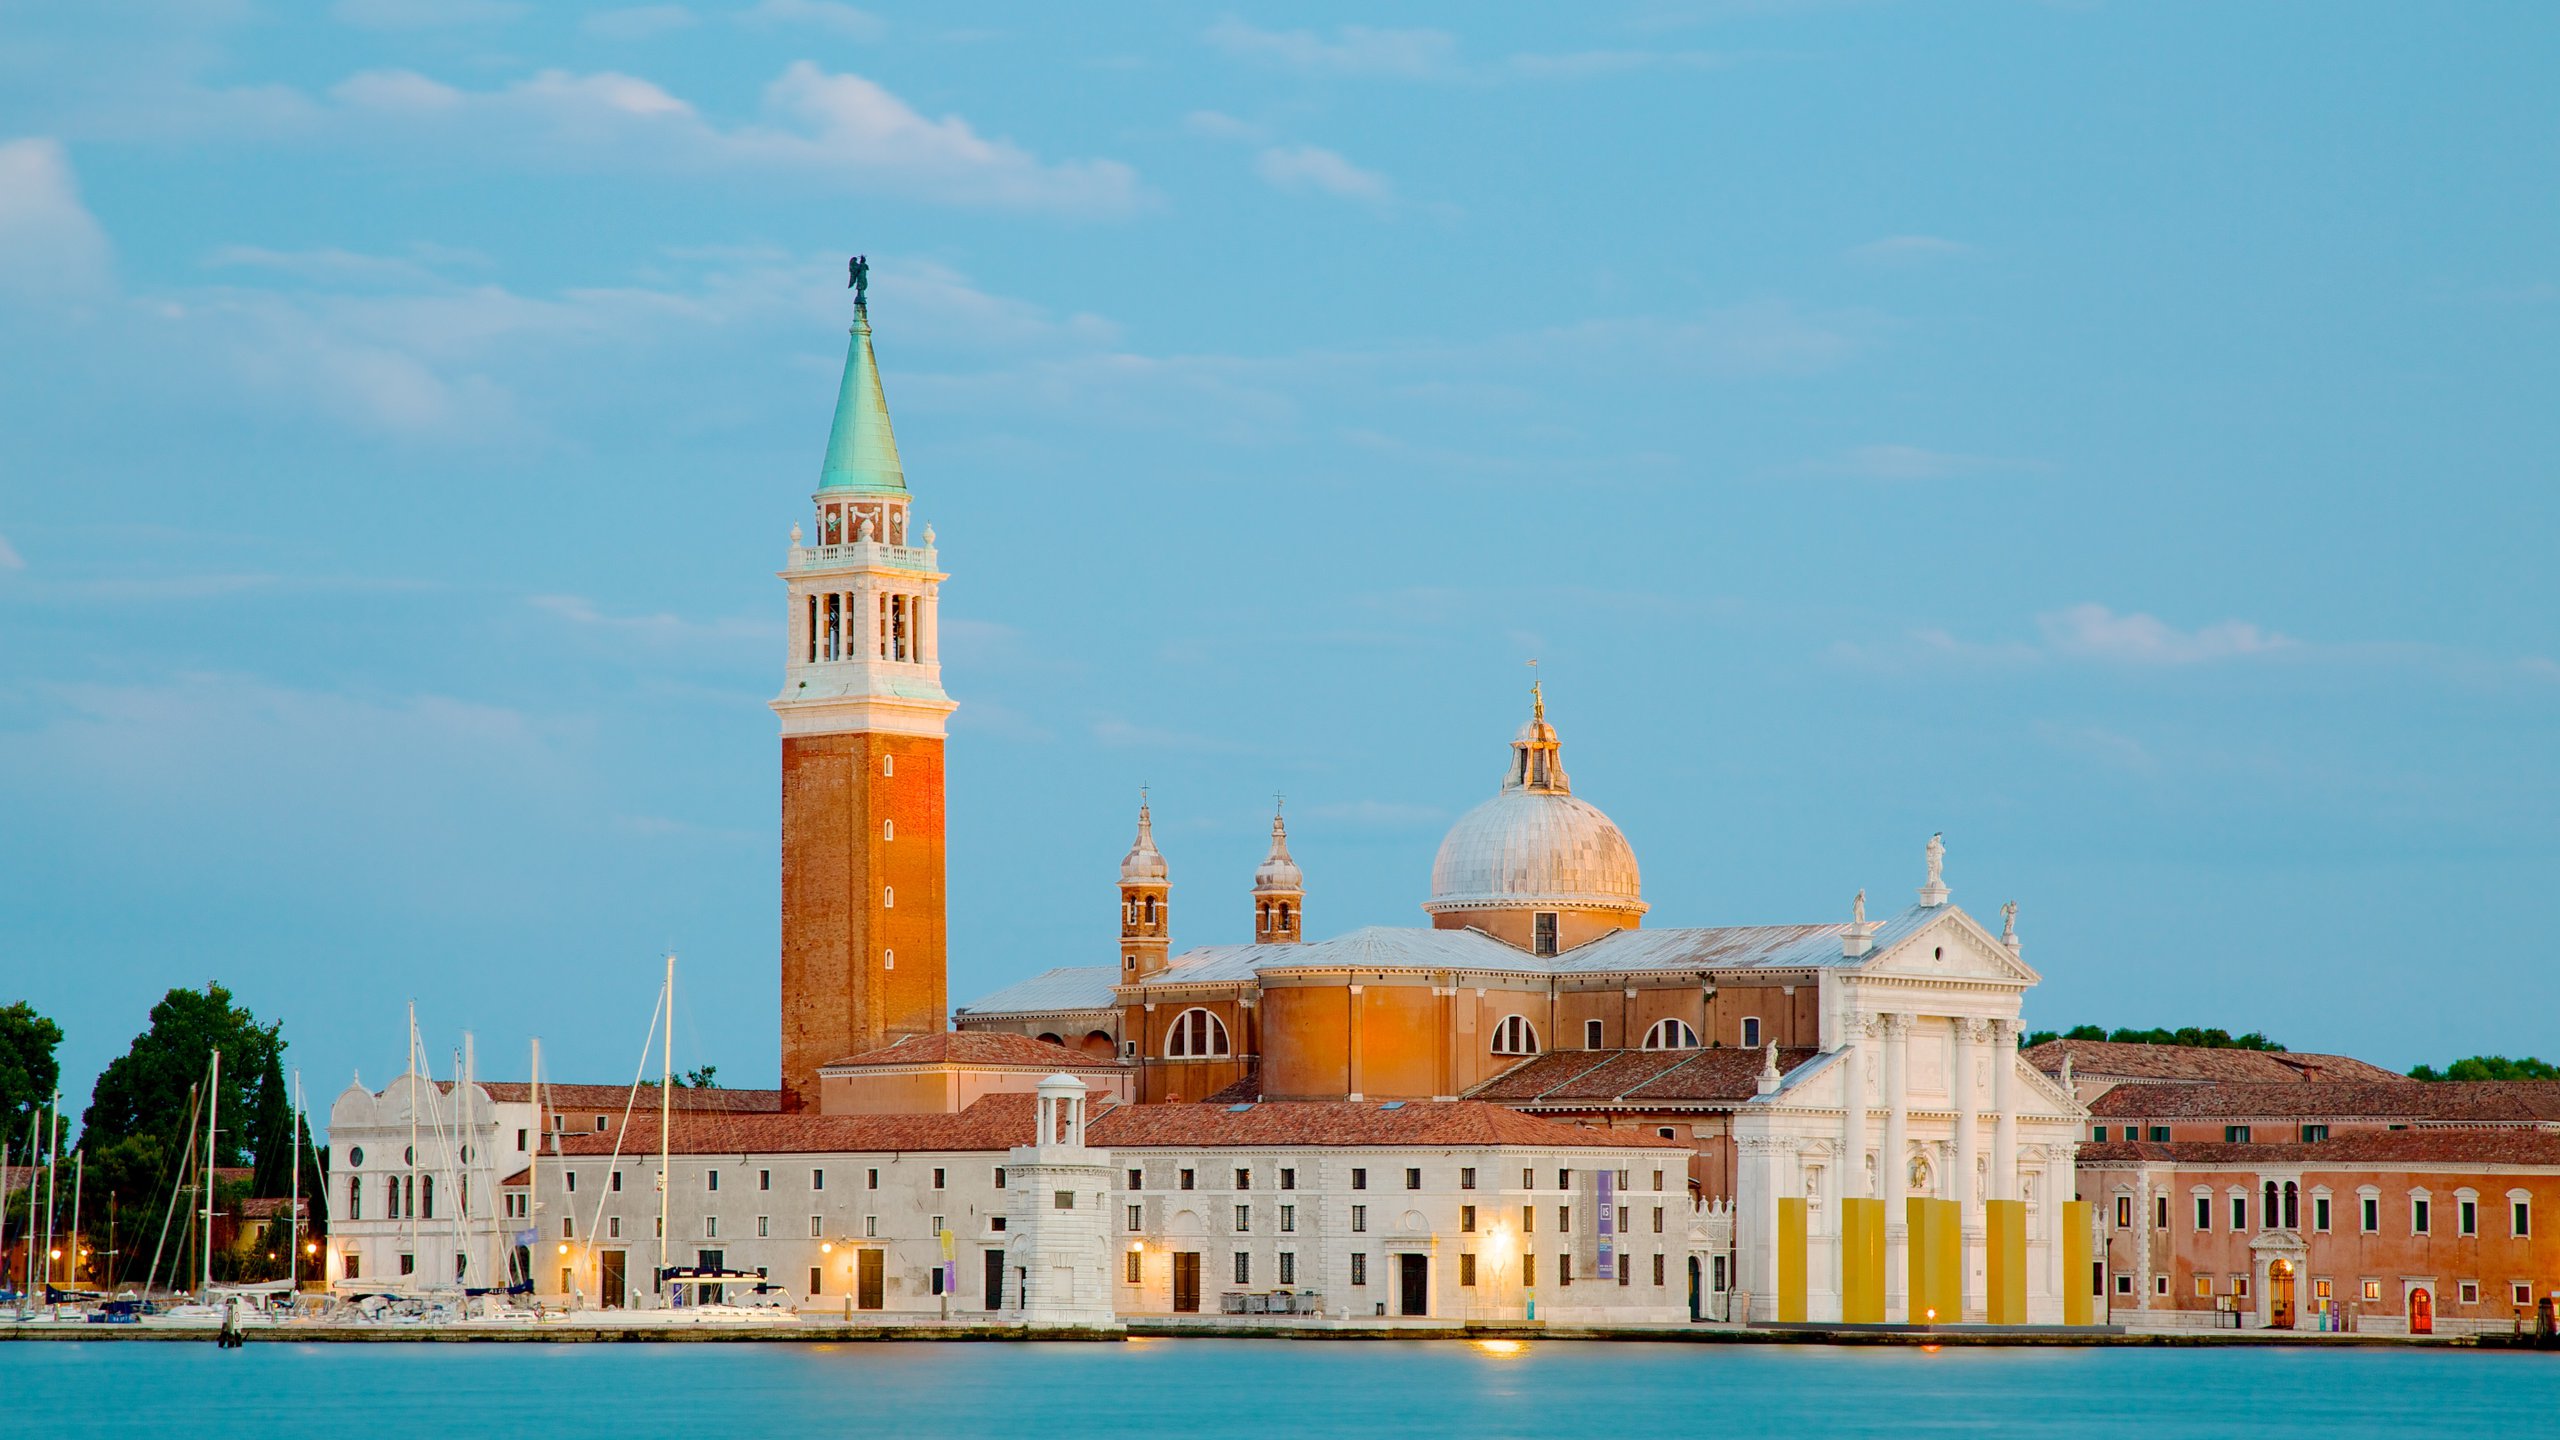 The Bell Tower of San Marco, Venezia, Veneto, IT